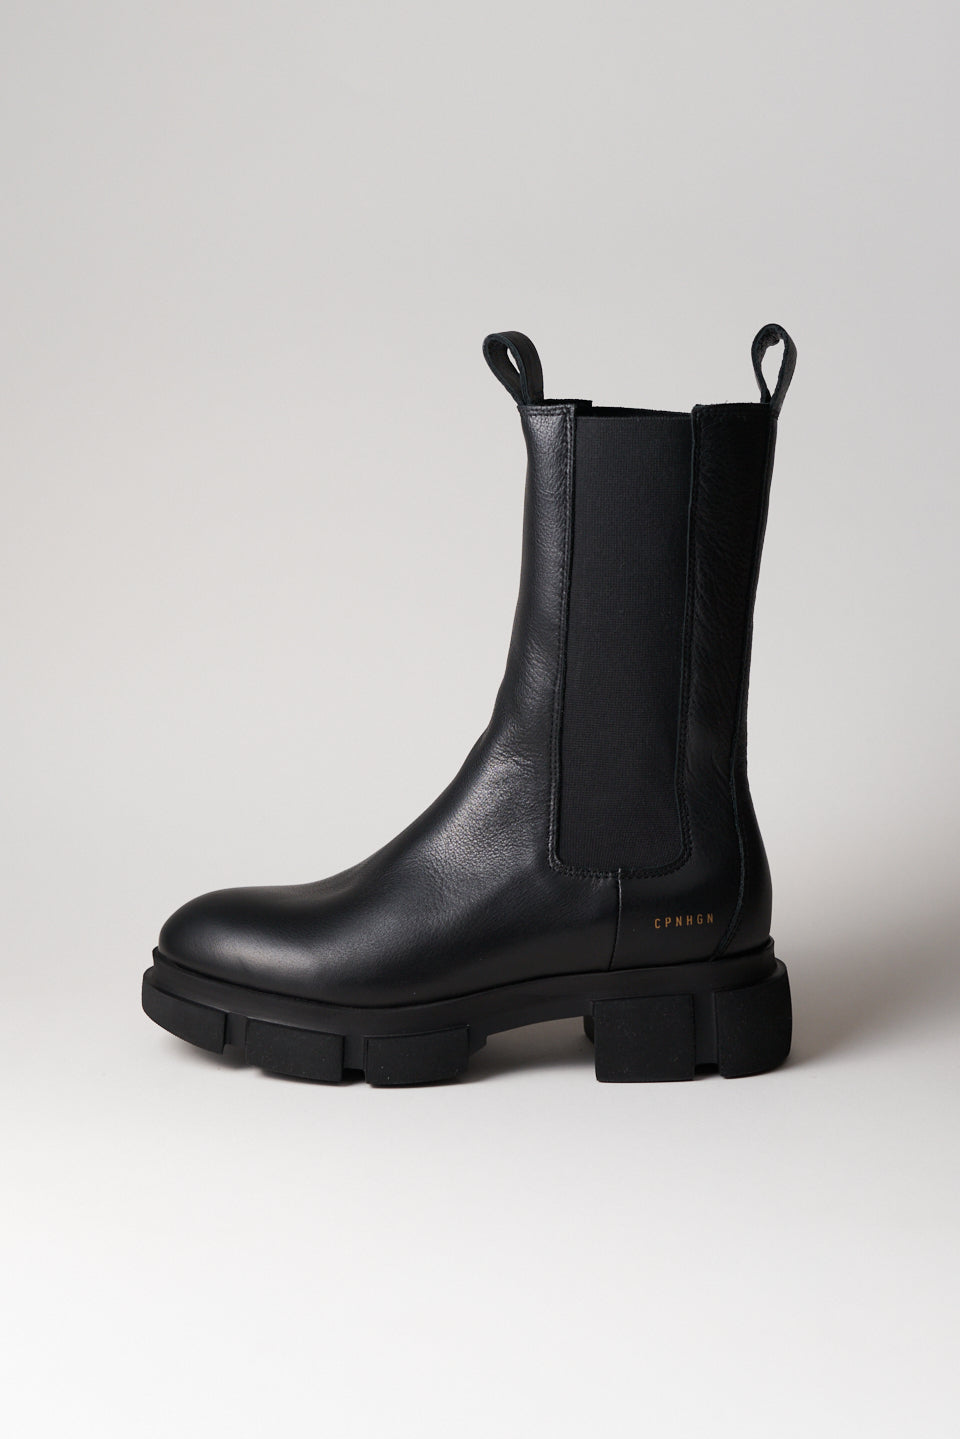 Vitello Black Chelsea Boots CPH500BLACK - 6